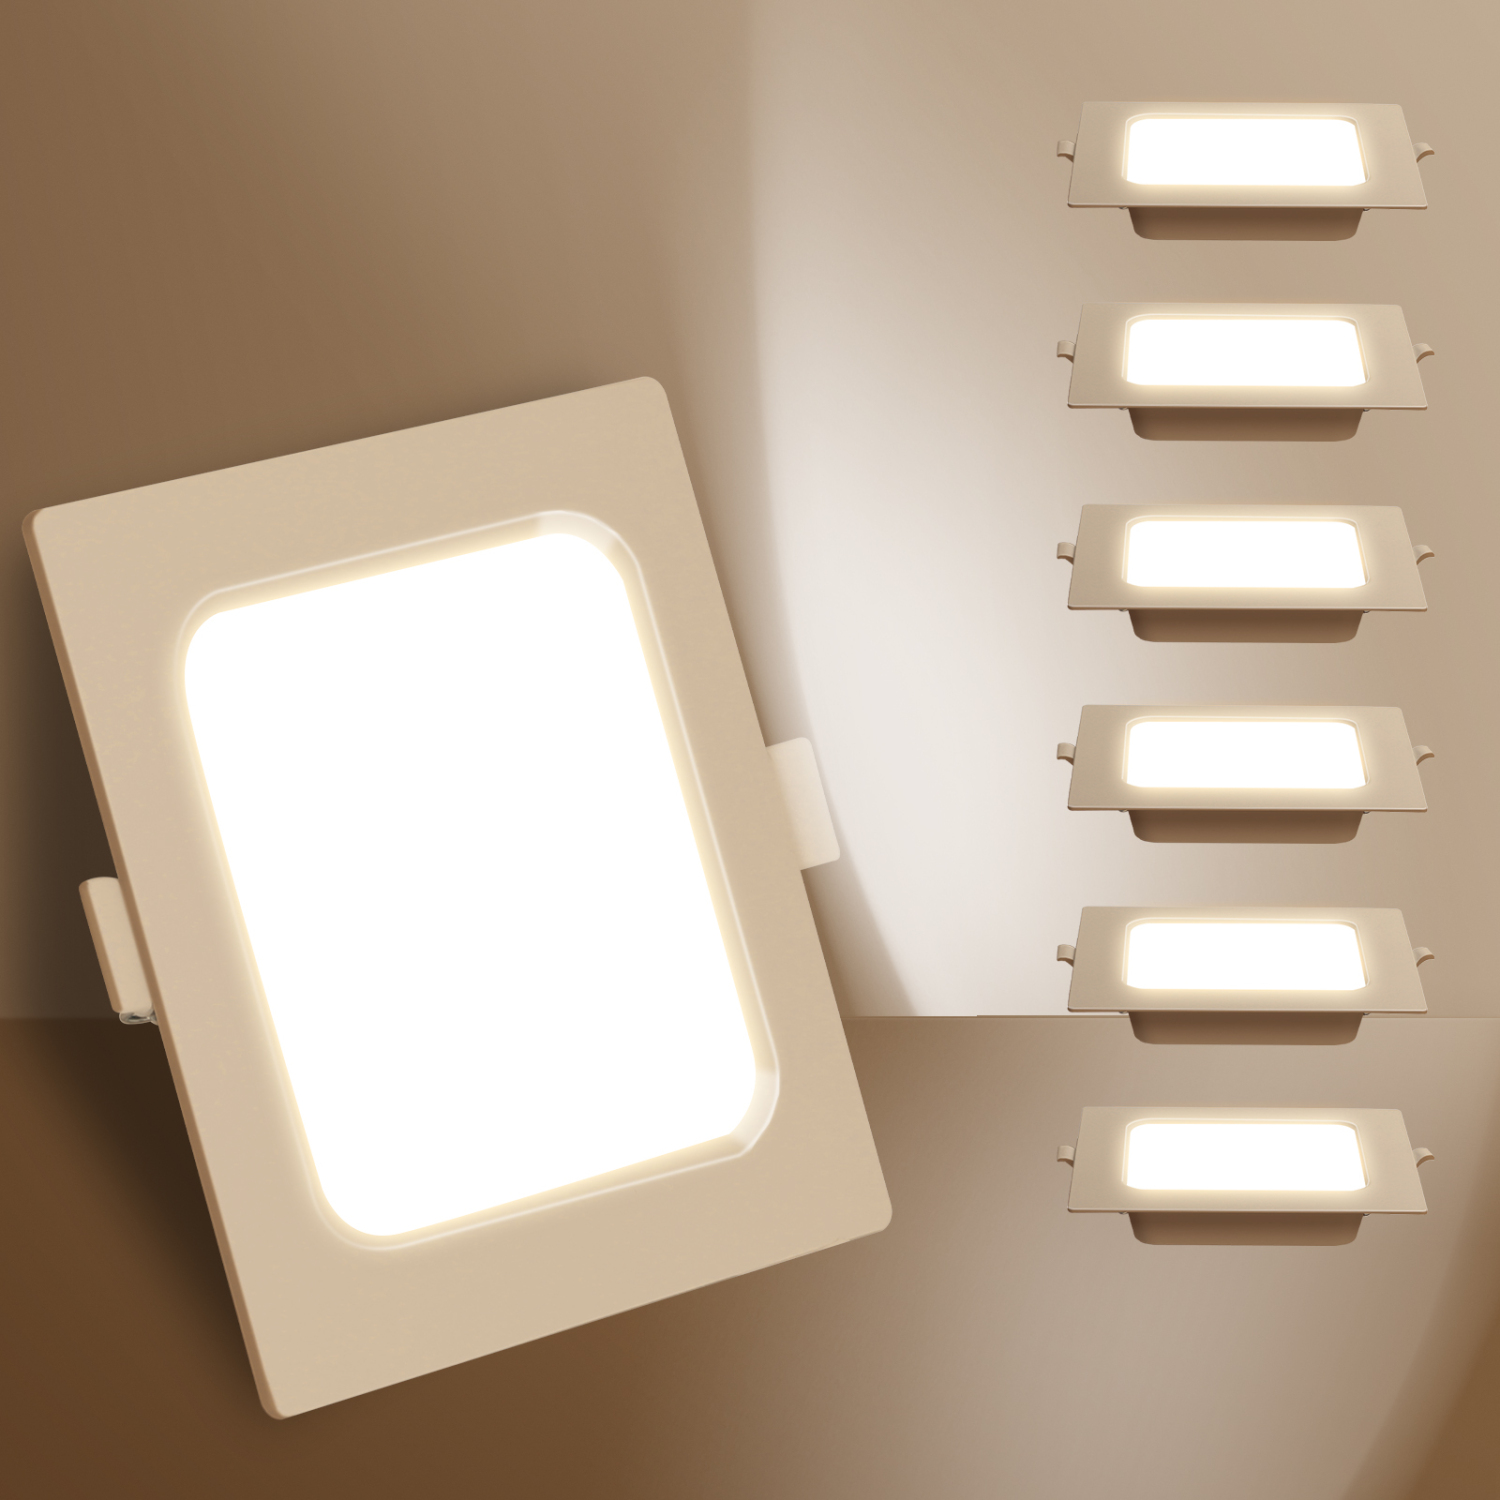 Aigostar Downlight da incasso a LED, 9W Equivalente 100W, 3000K Luce Bianca Calda, Bianco, Faretti LED, Oblò a LED, Ф110-120mm, Confezione da 6 [Classe di efficienza energetica A+]